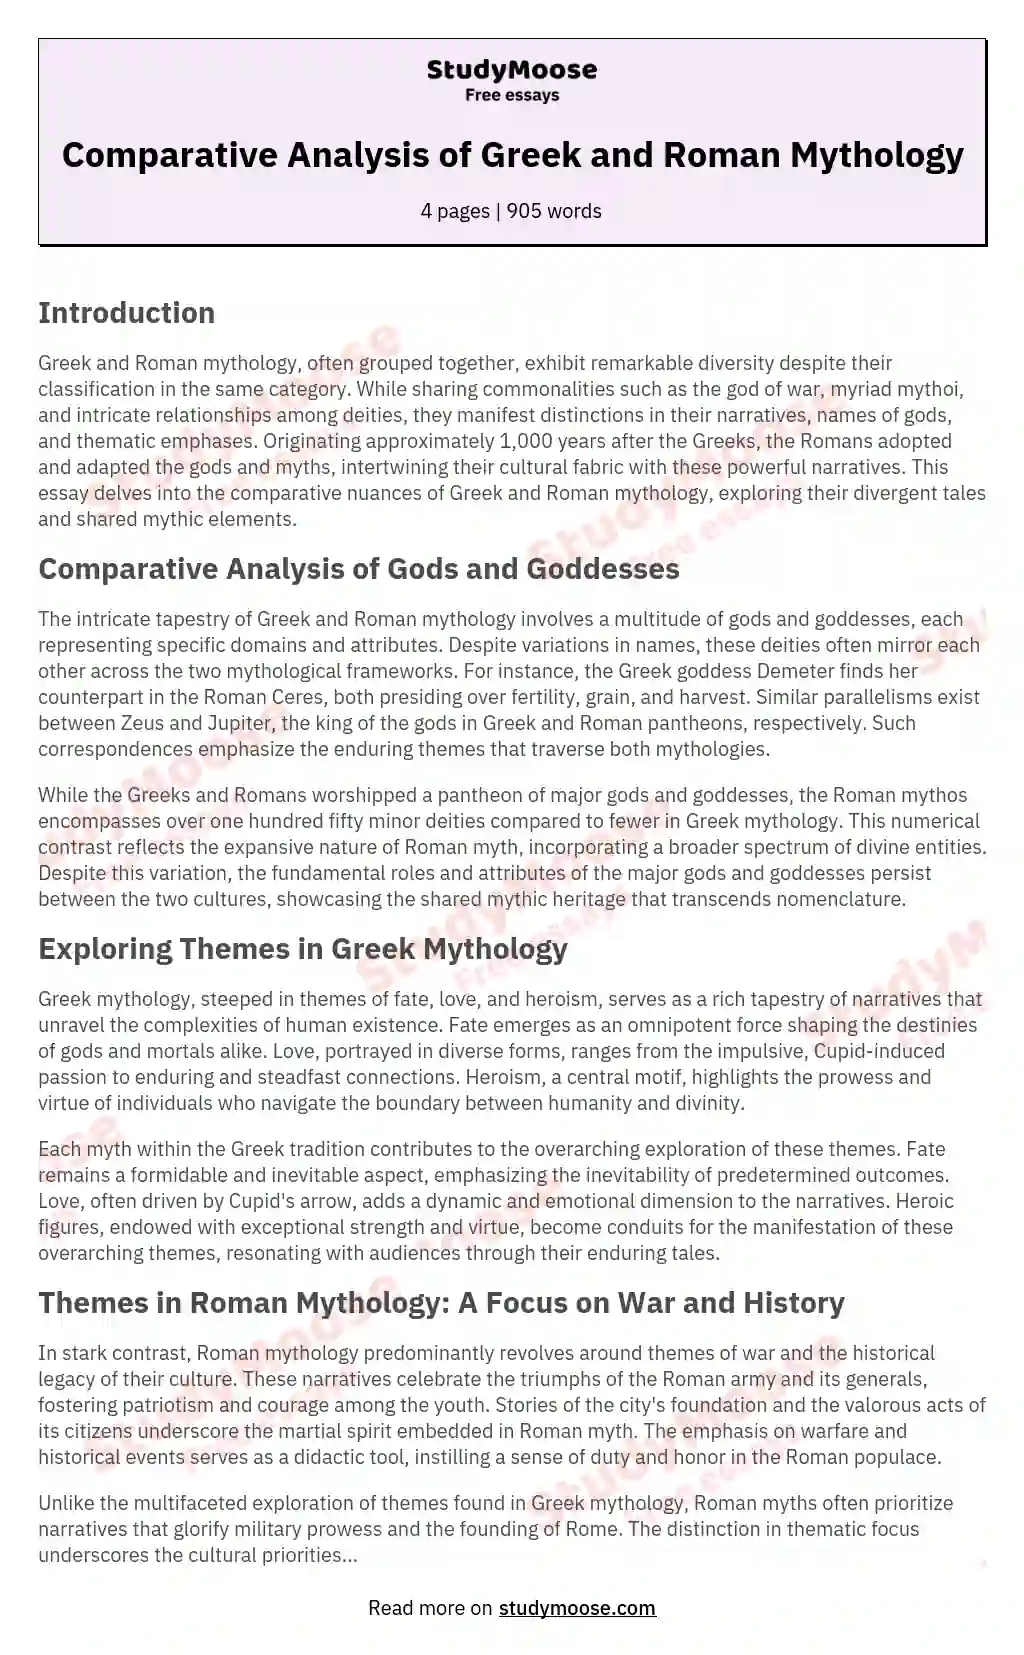 Comparative Analysis of Greek and Roman Mythology essay